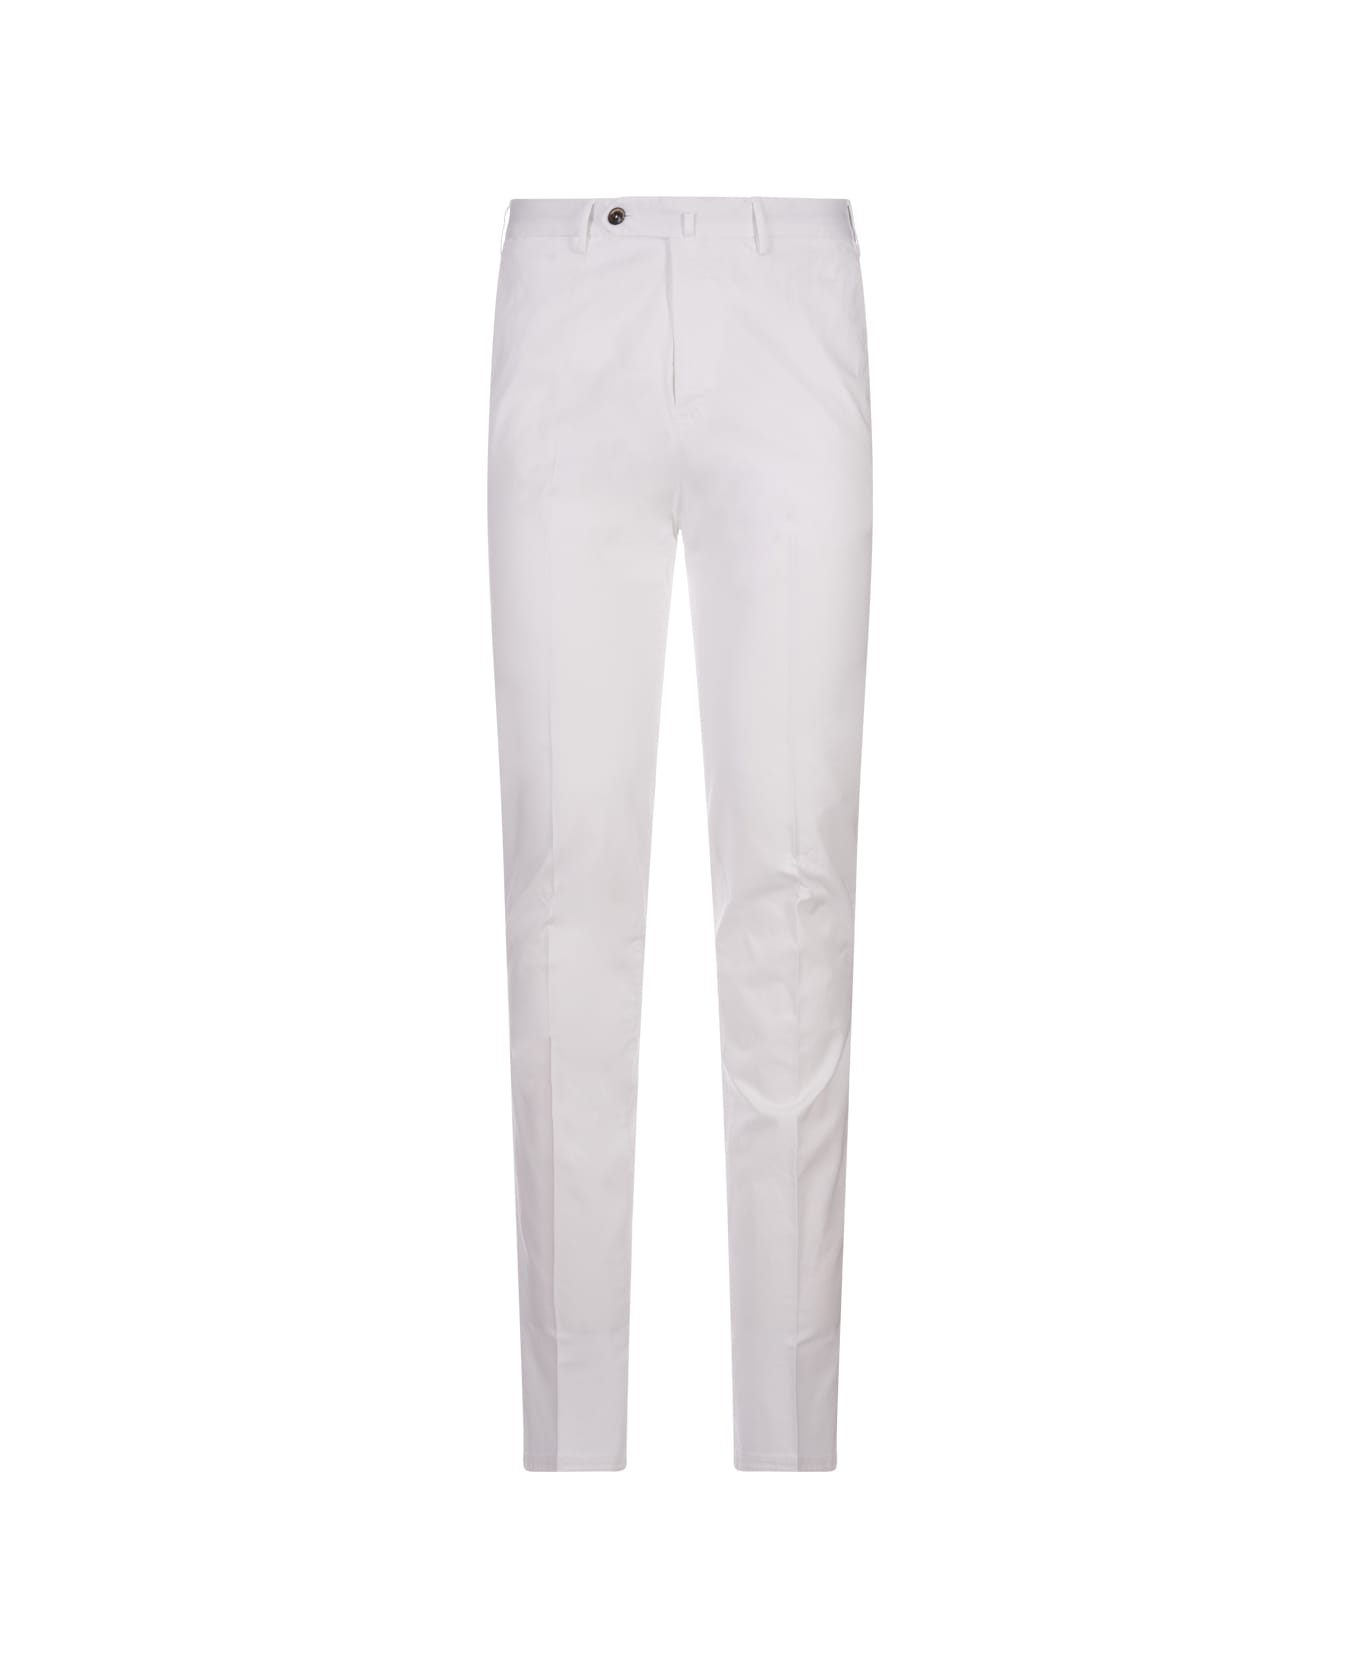 PT Torino White Stretch Cotton Classic Trousers - White